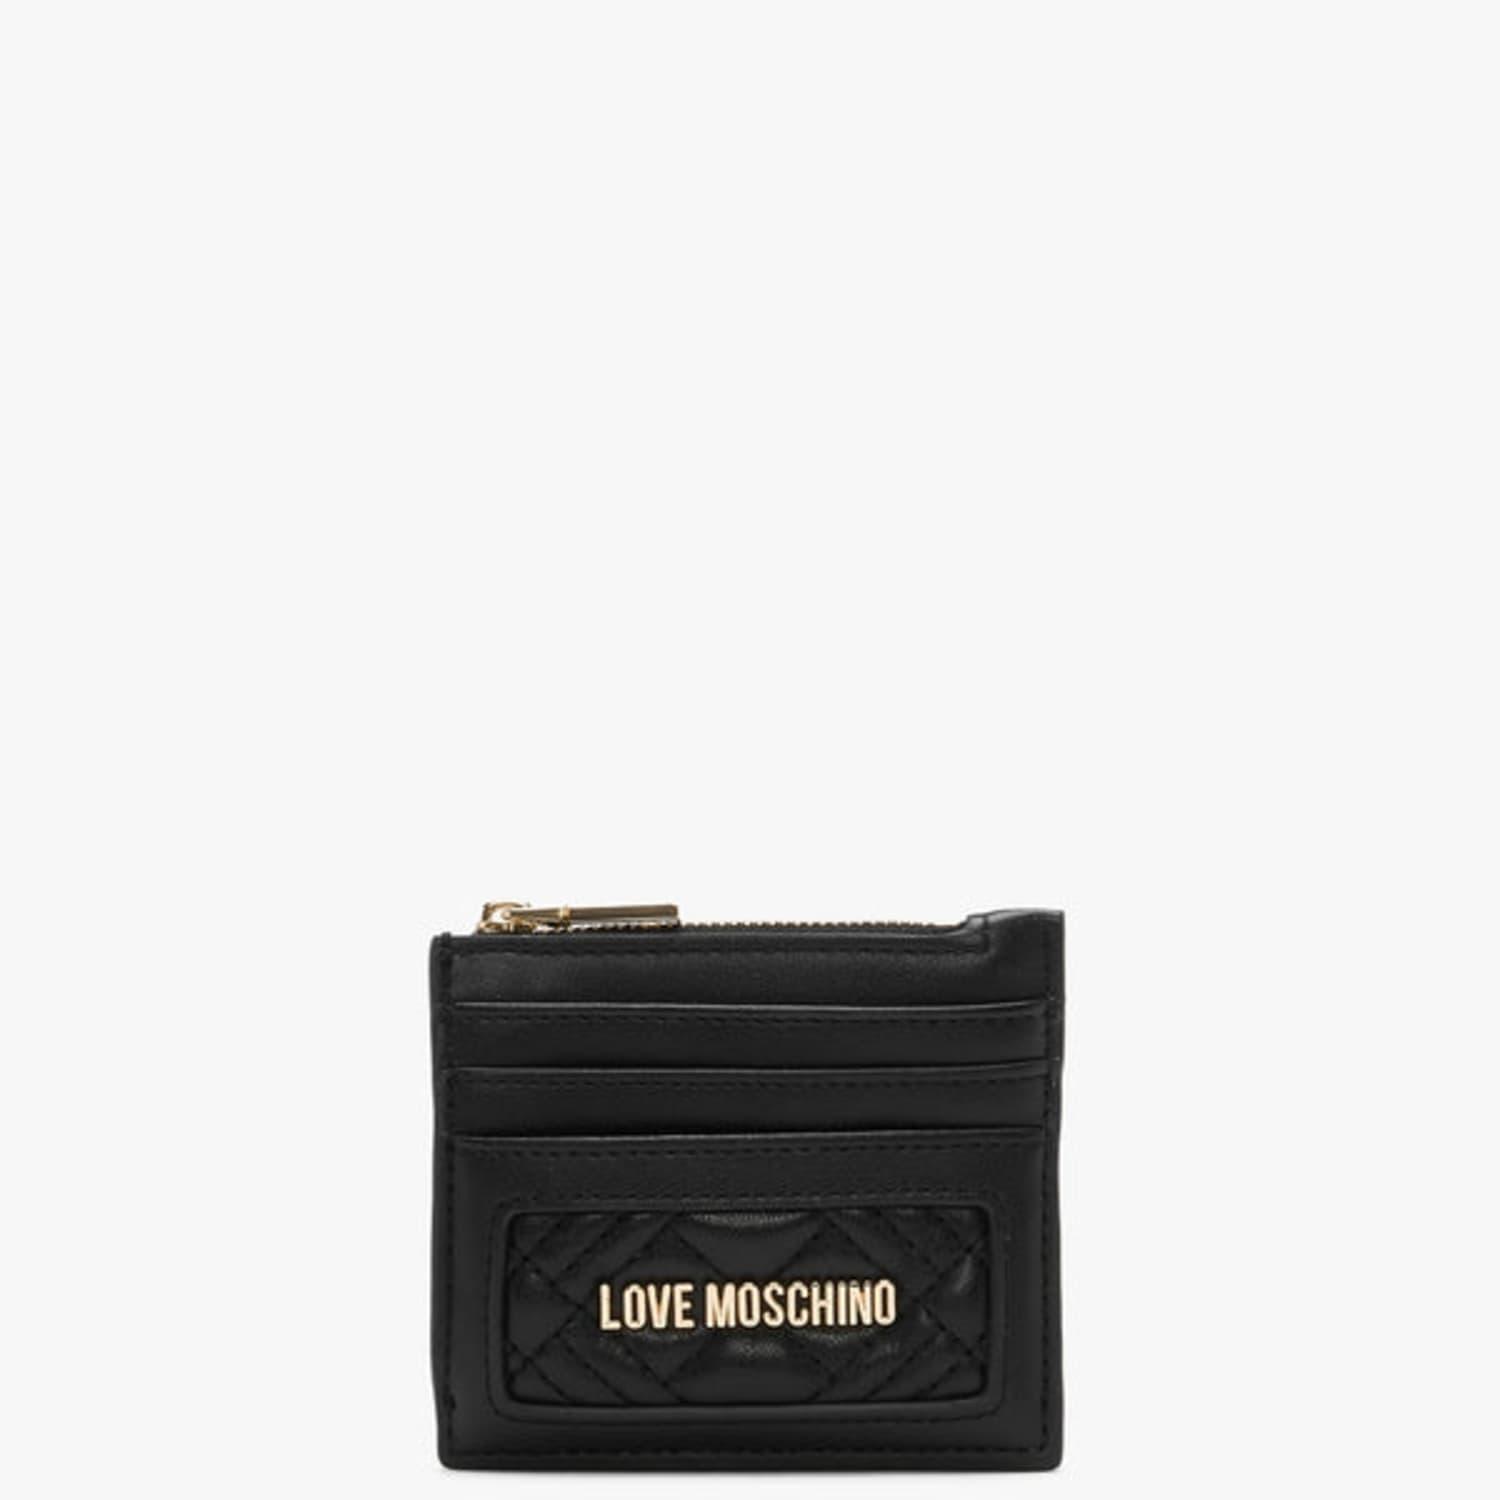 Love Moschino Diamond Quilt Nero Card Case in Black | Lyst